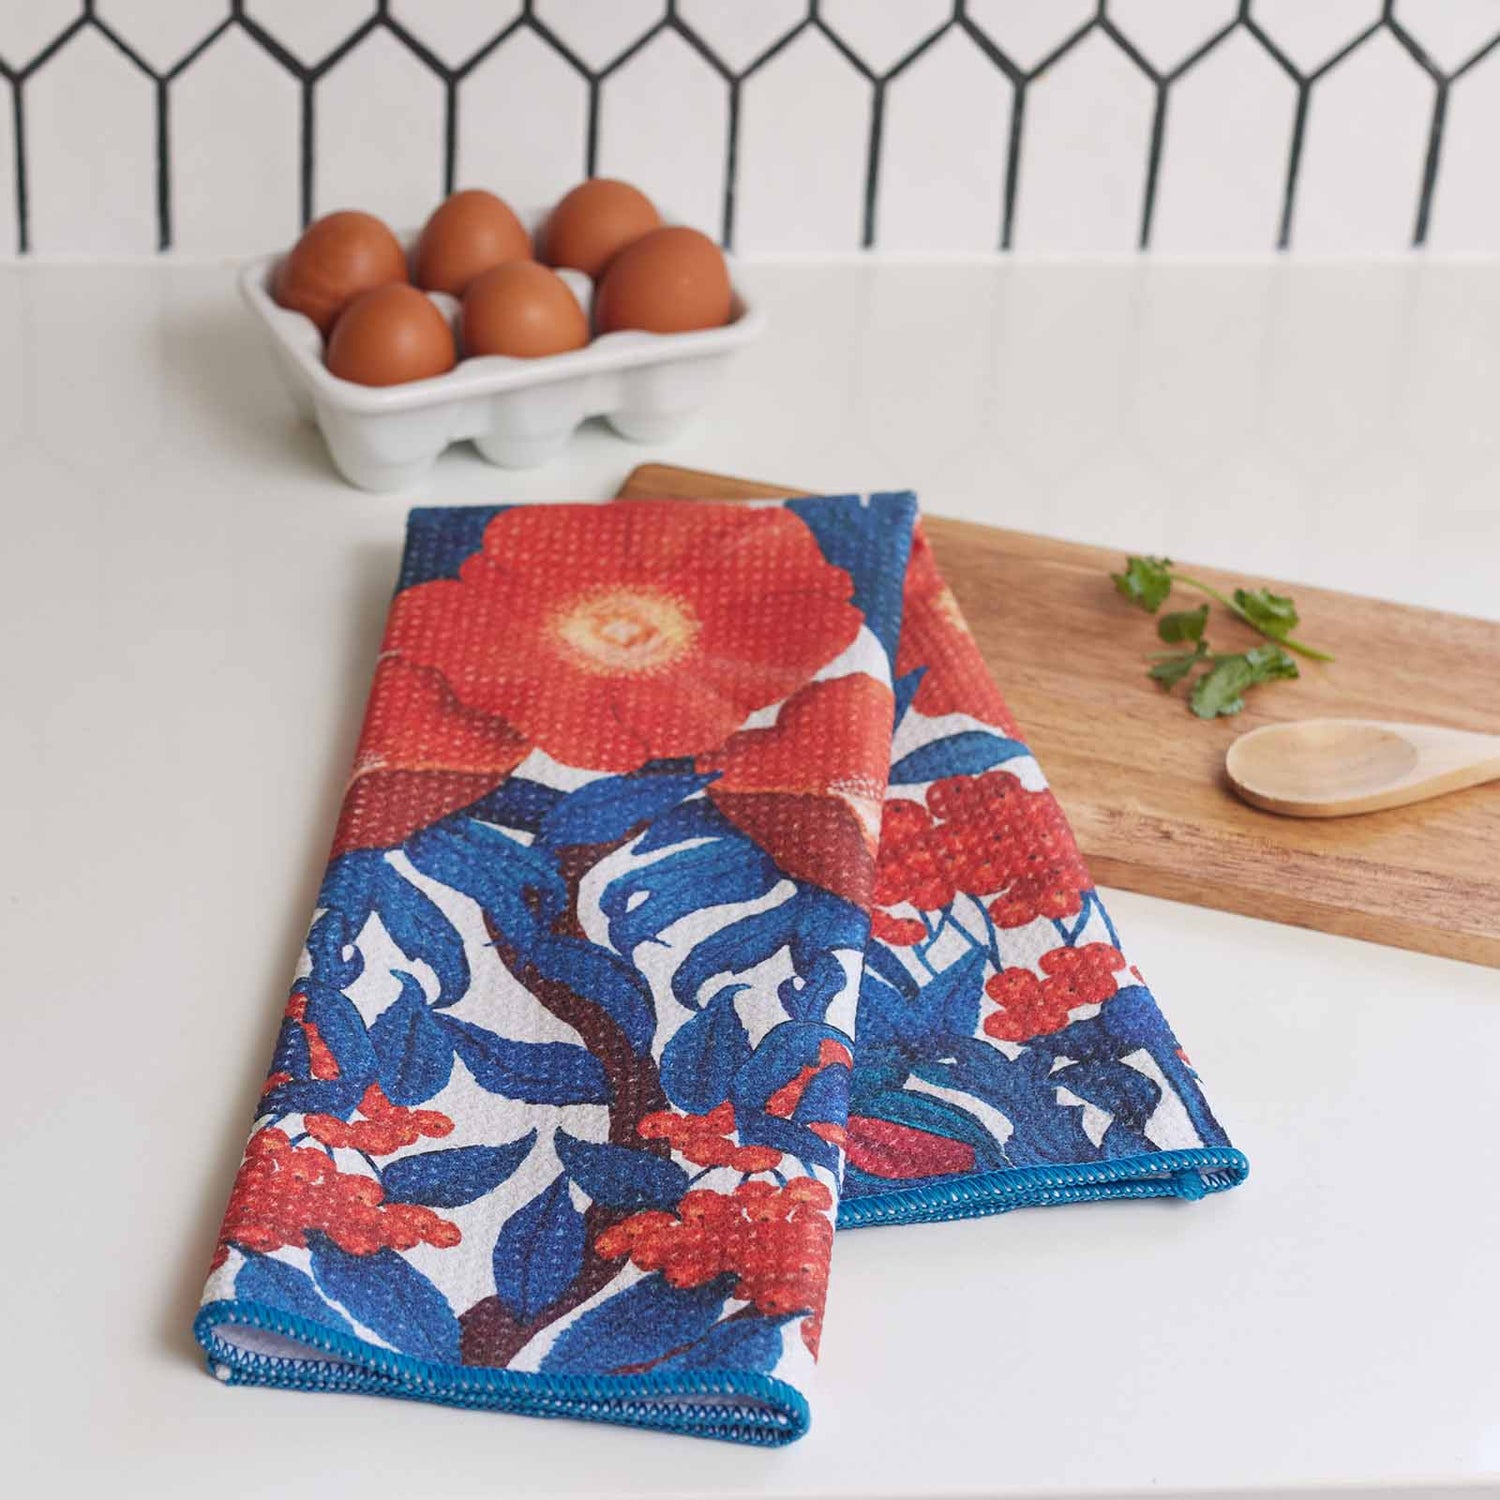 Pressed Petals Blu Kitchen Tea Towel